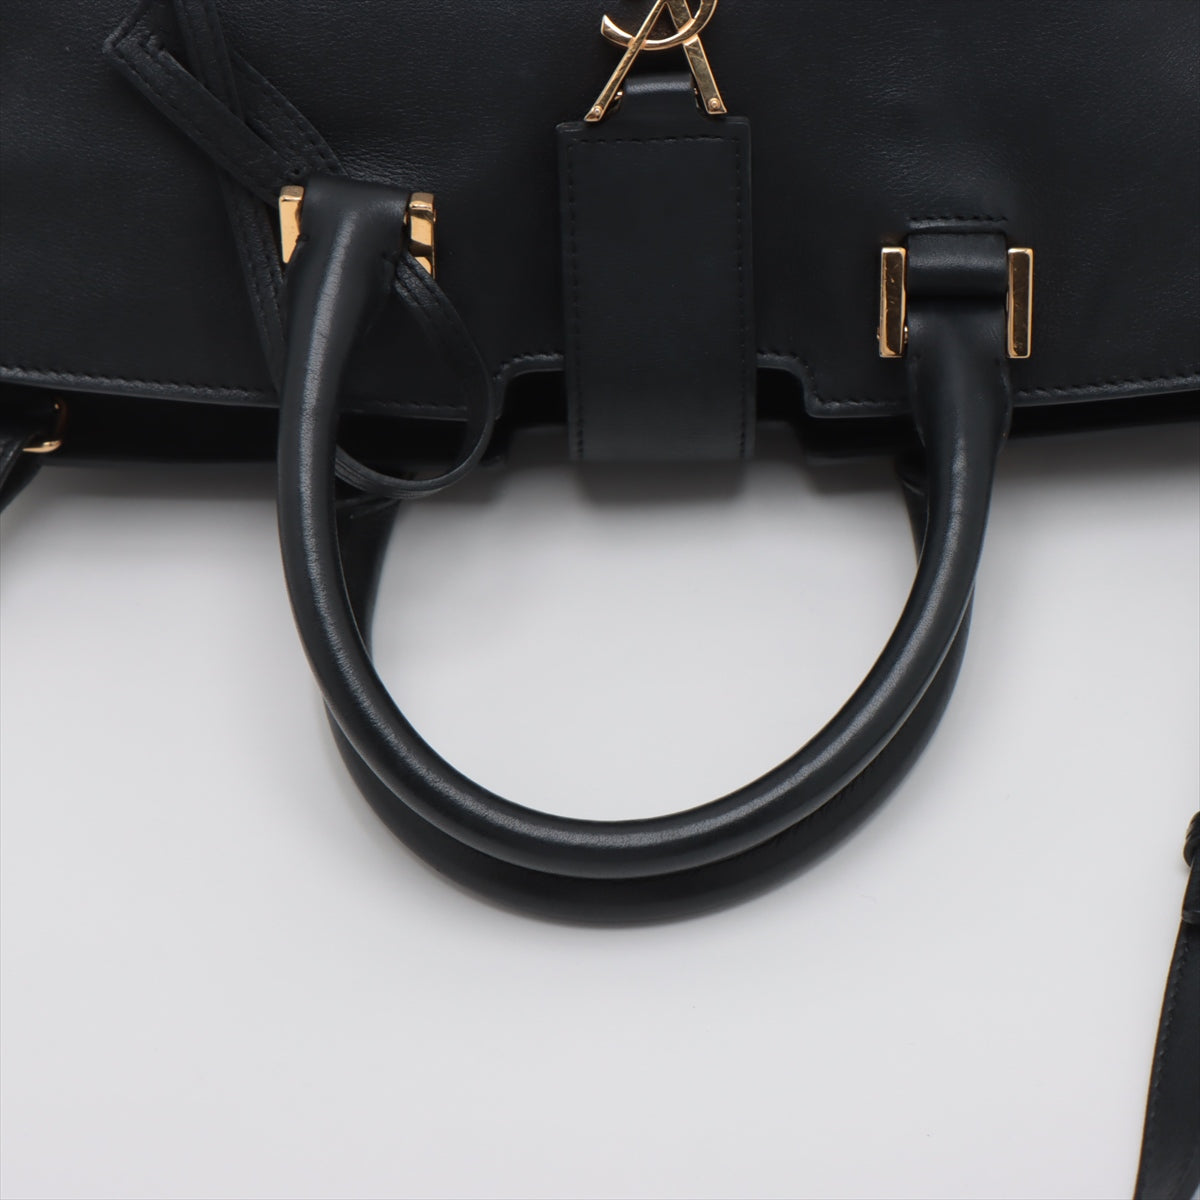 Saint Laurent Cabas Leather 2WAY Handbag Black 424869